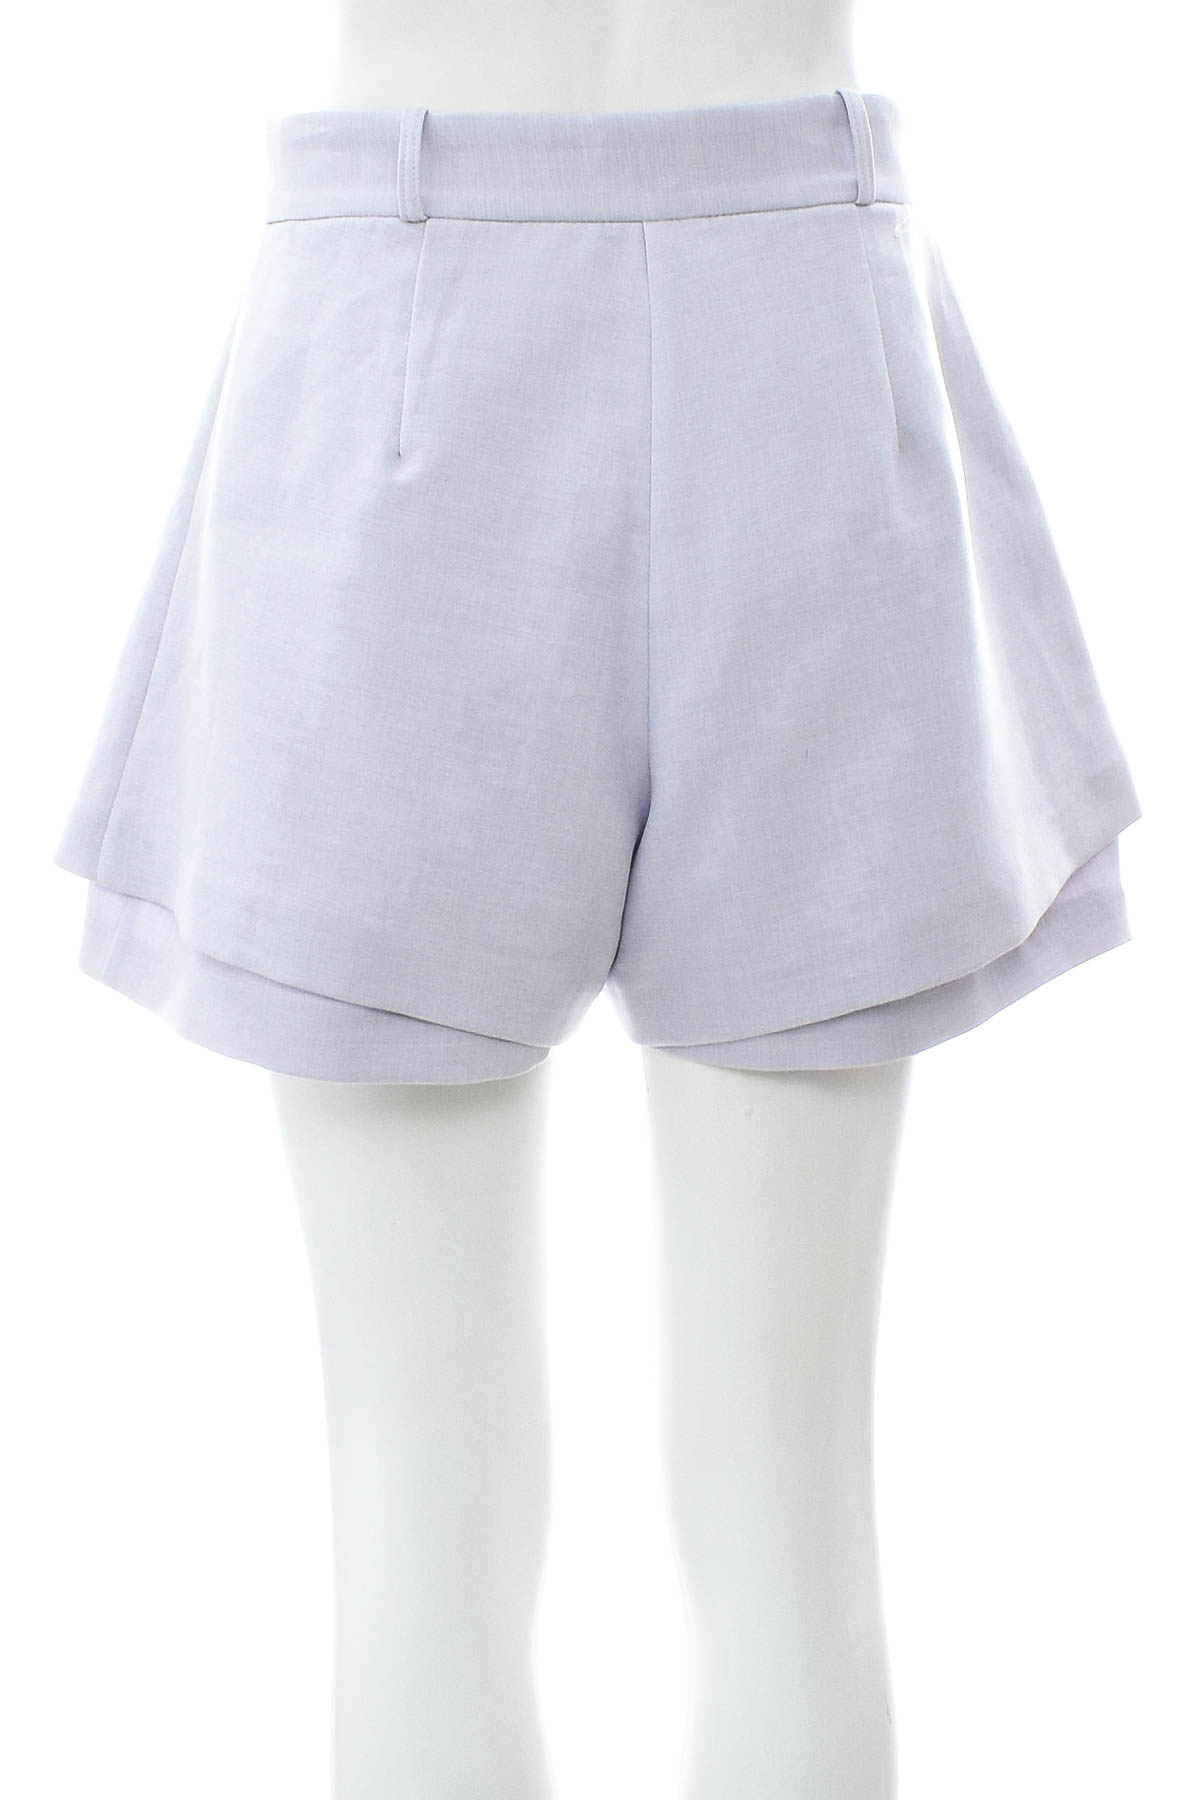 Female shorts - RIVER ISLAND - 1